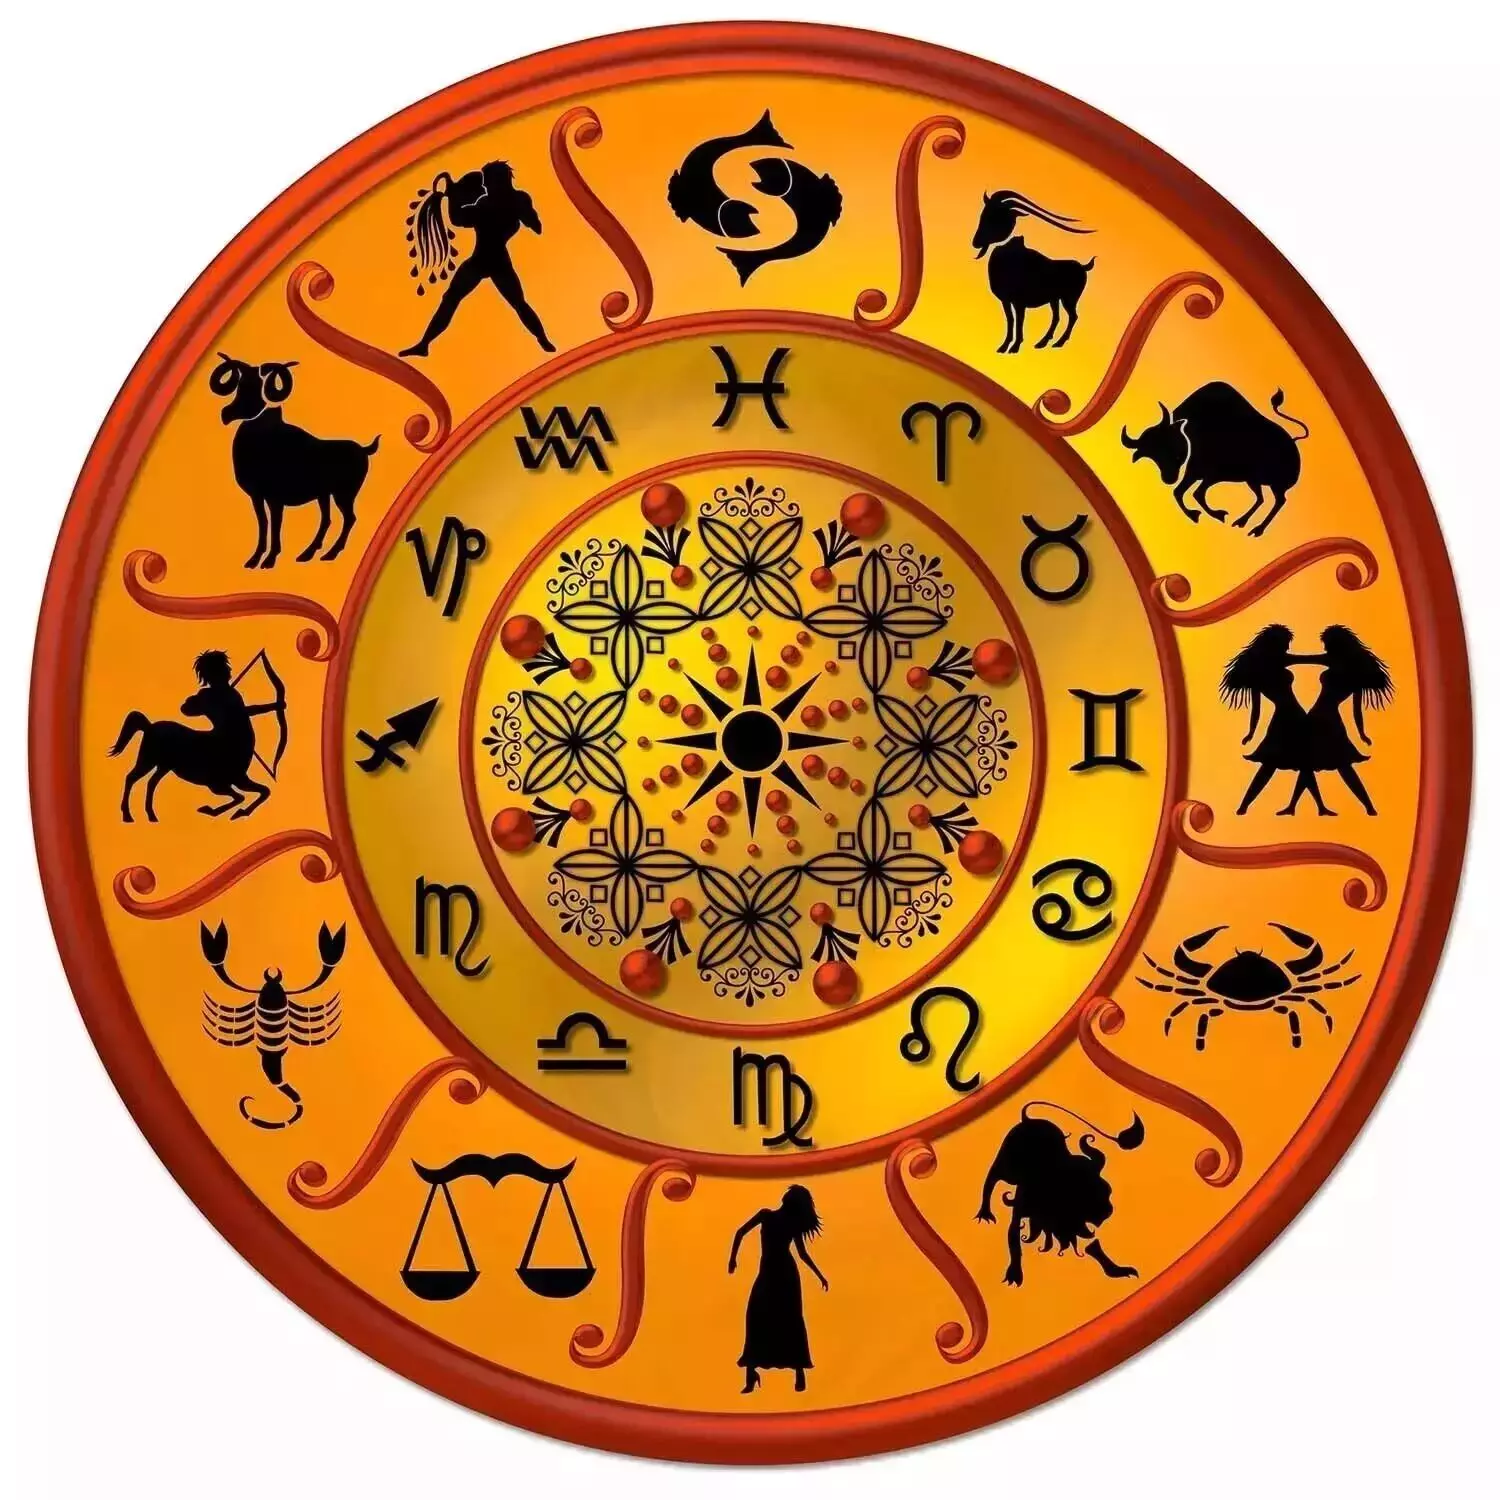 25 November – Know your todays horoscope